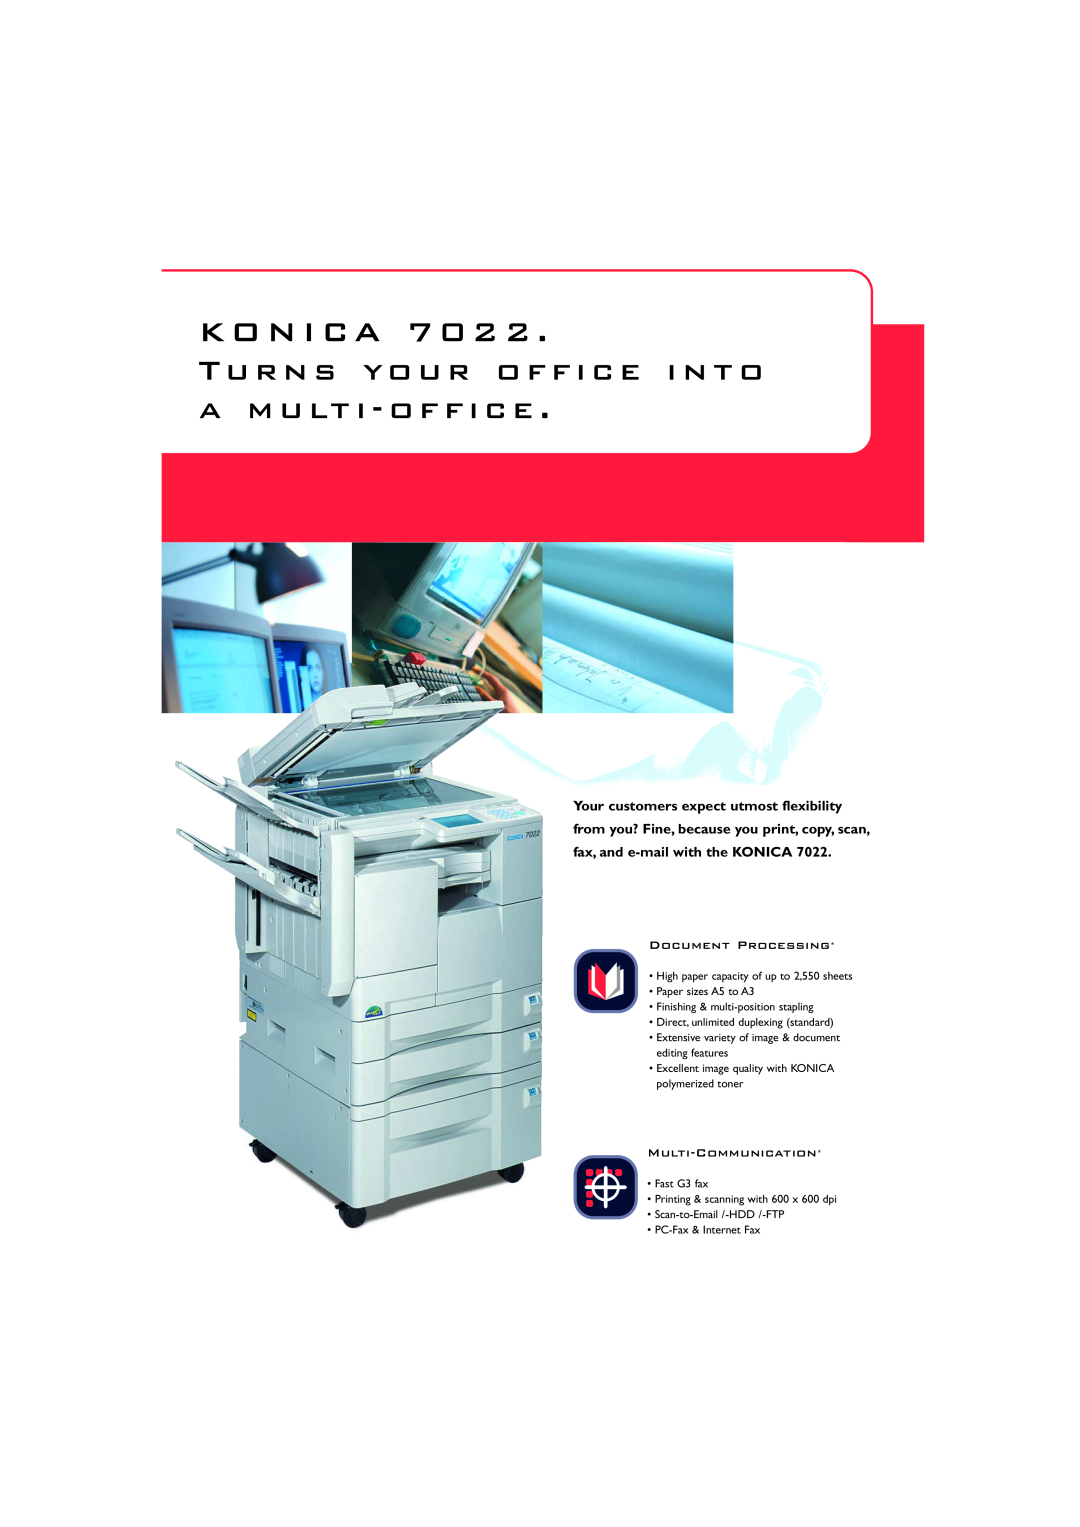 Konica Minolta 7022 manual Document Processing, Multi-Communication, KO N I C A 7 0 